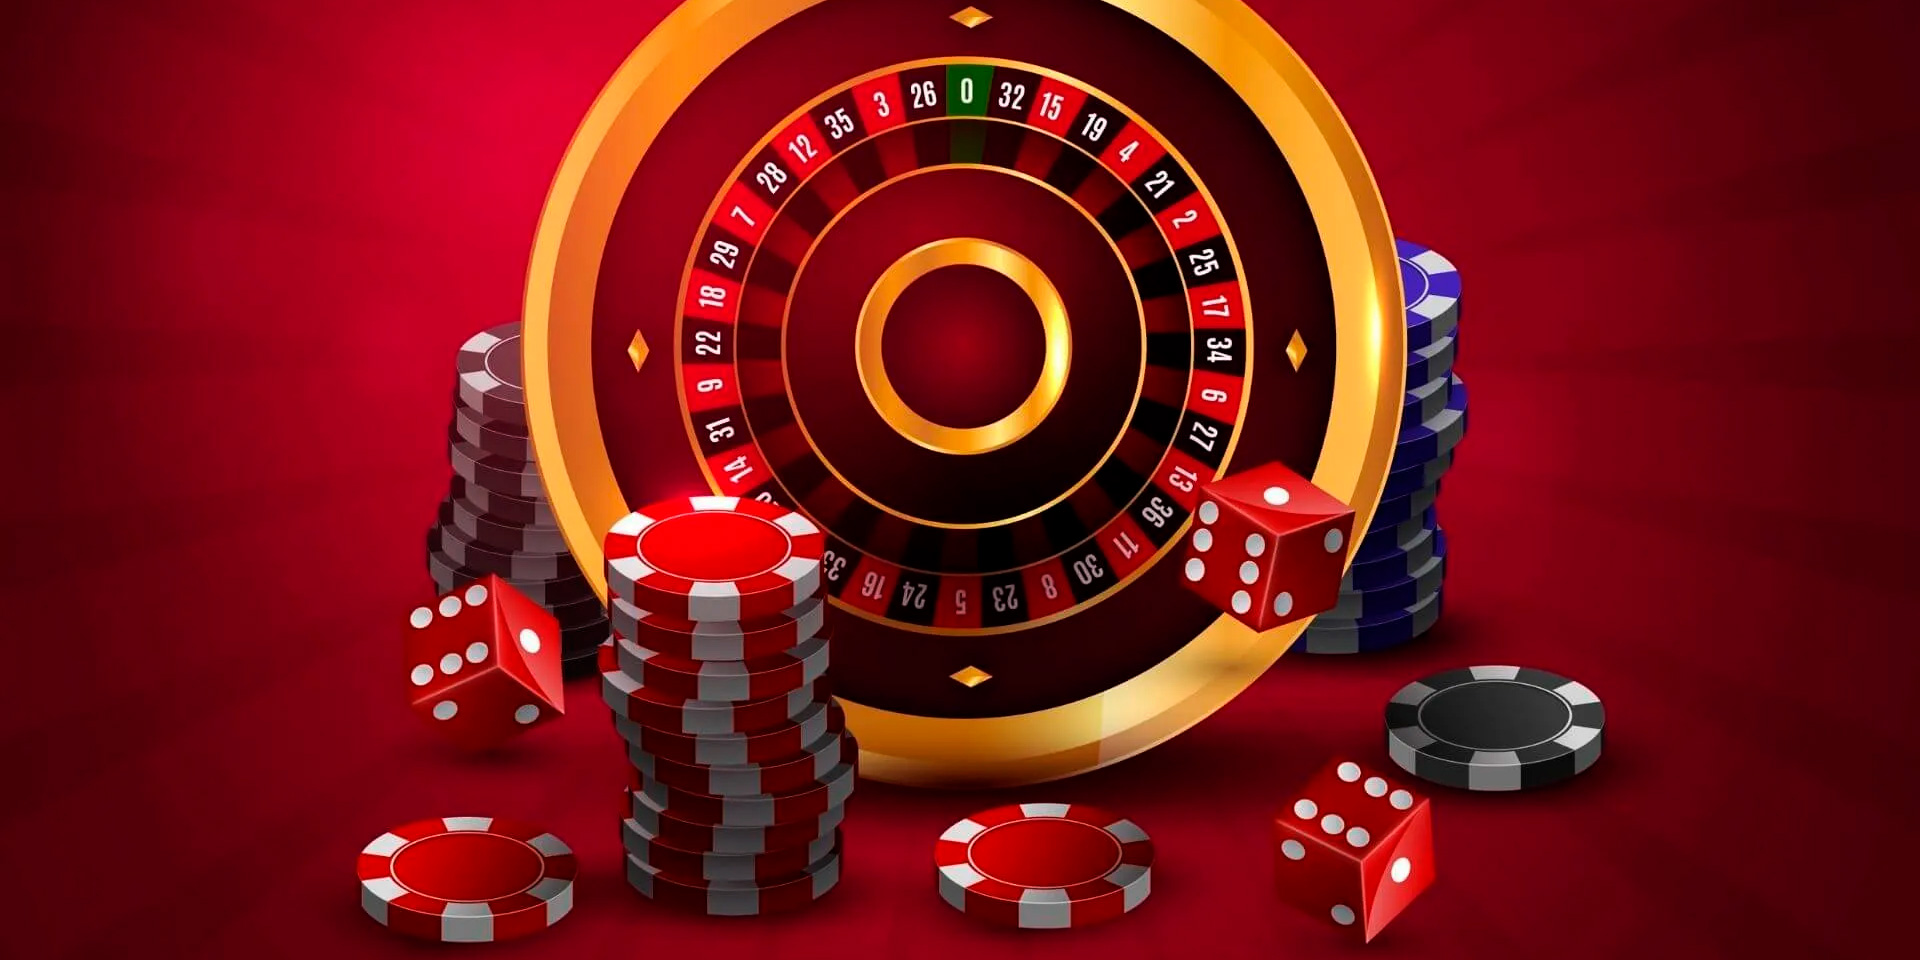 Online casino tax reform